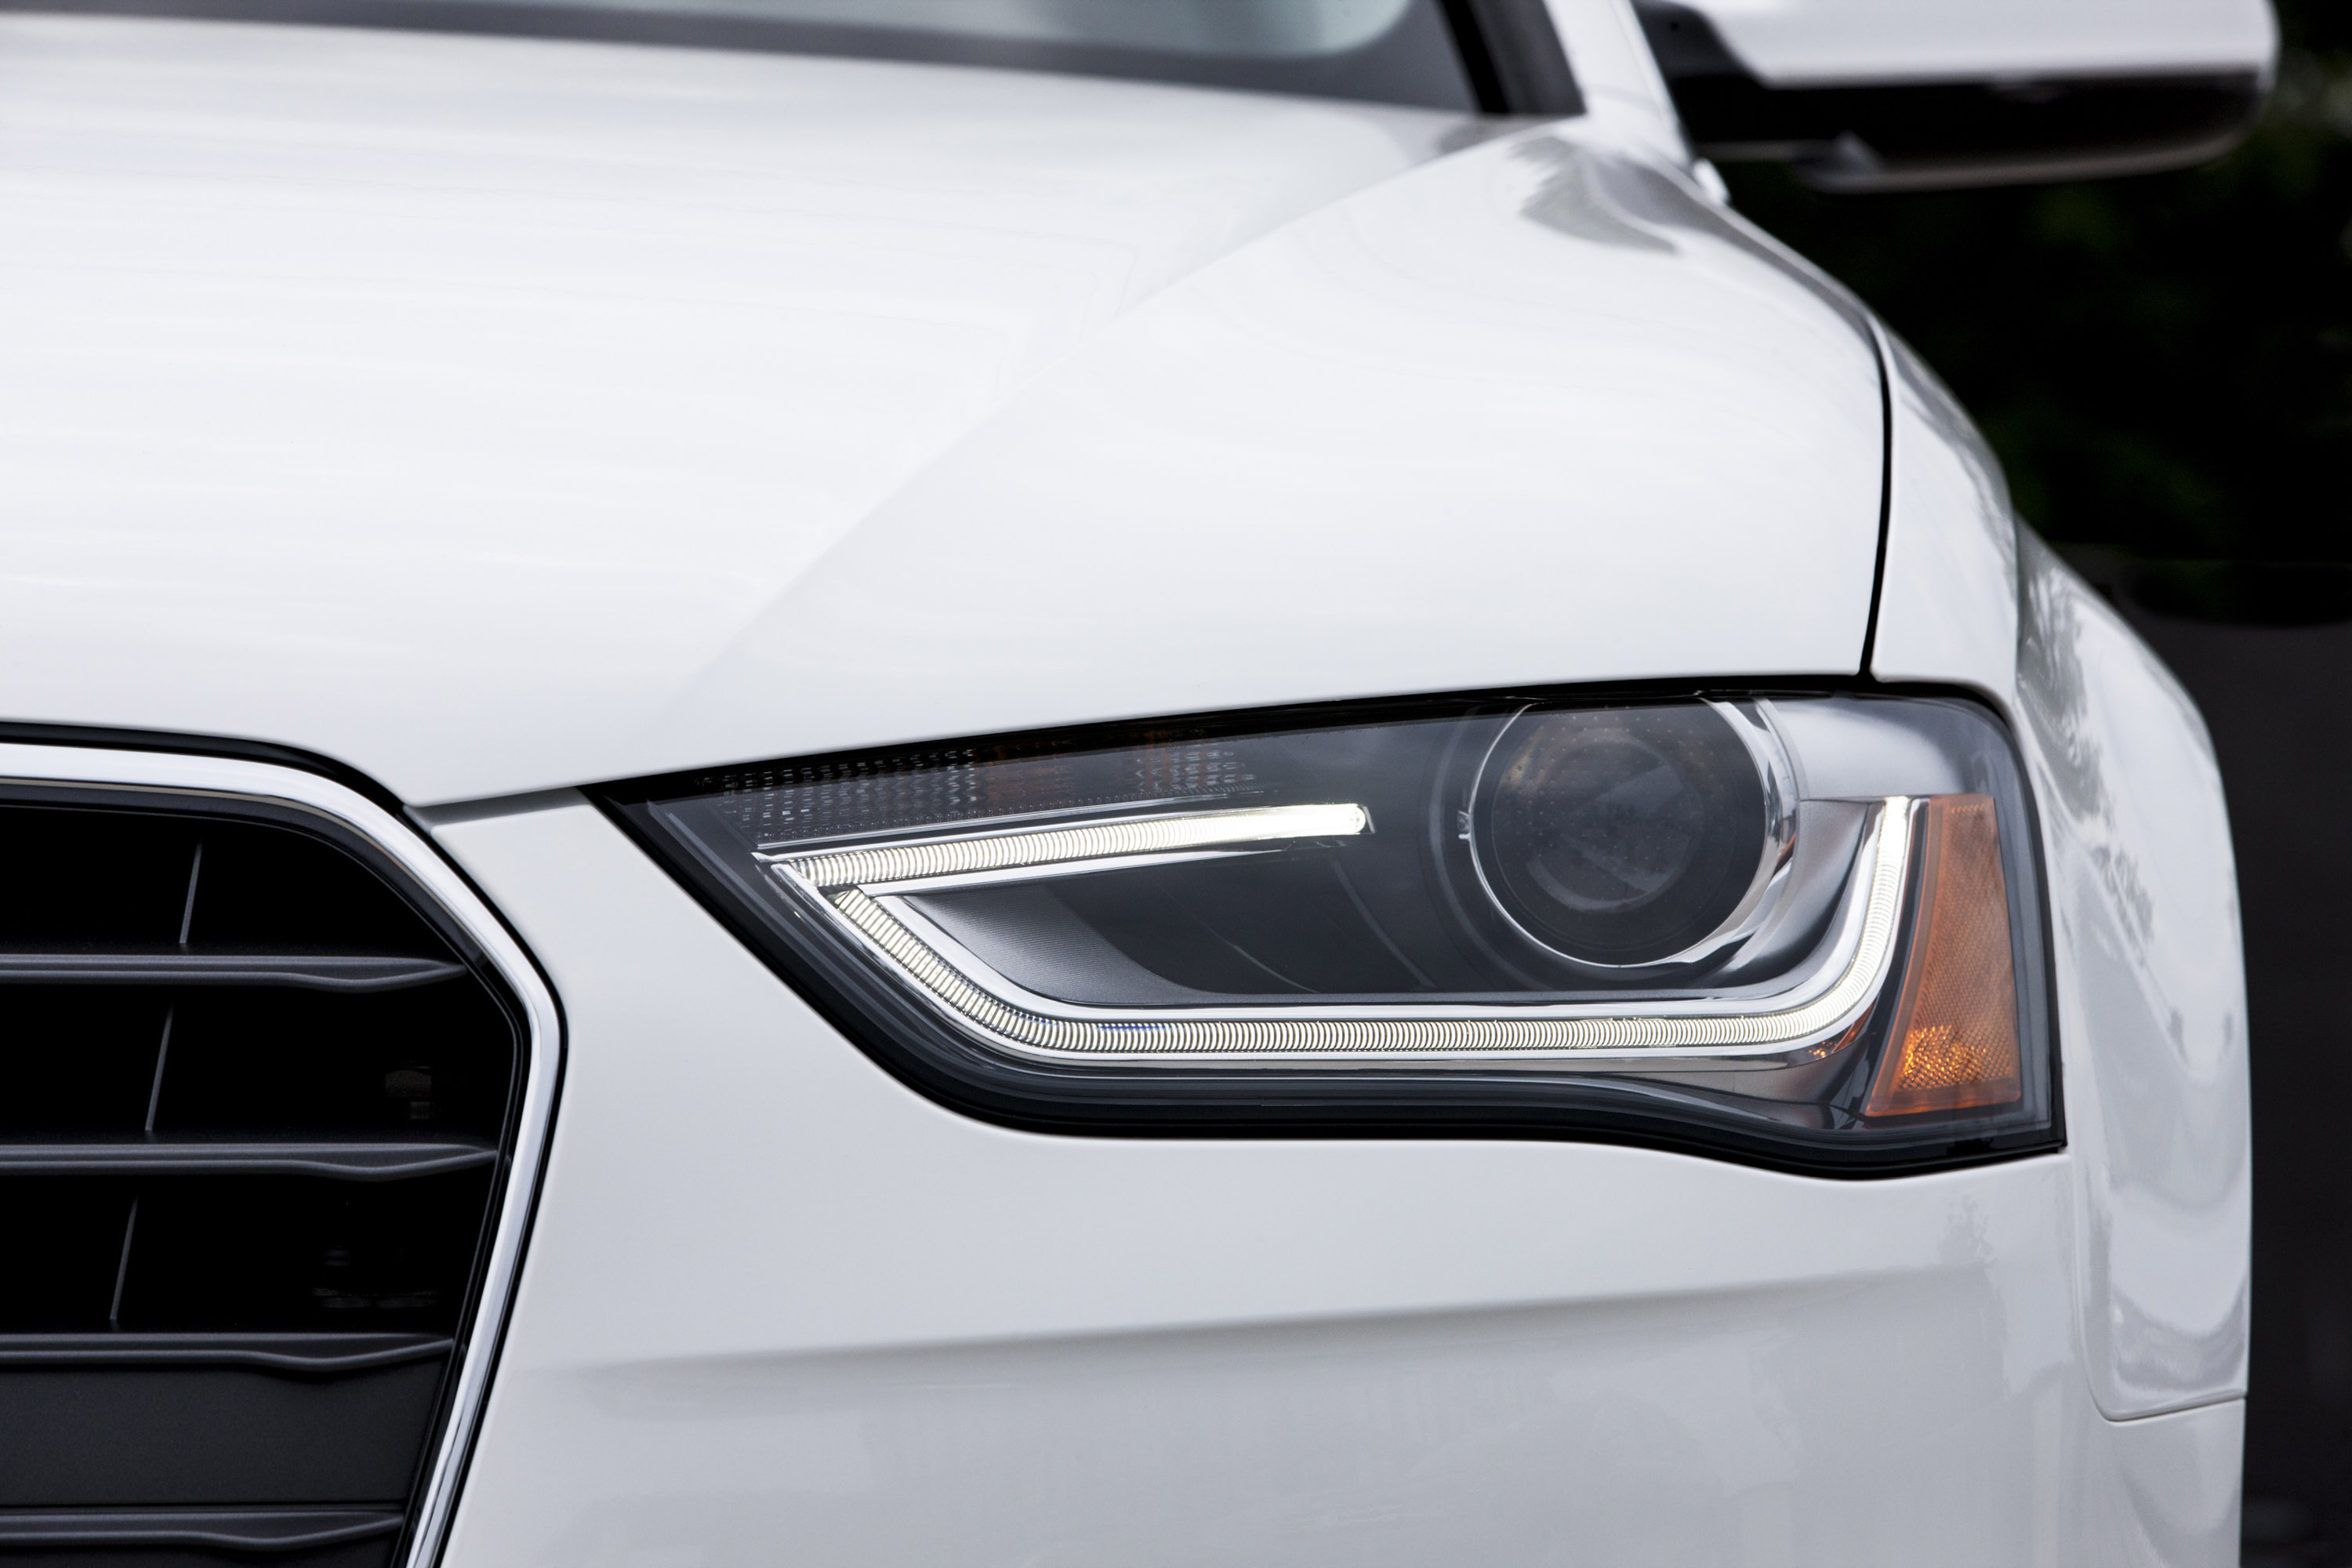 Audi a4 b8 фары. 2013 Audi a6 Headlight. Фары Ауди а3 2015. Audi a3 2014 фары.